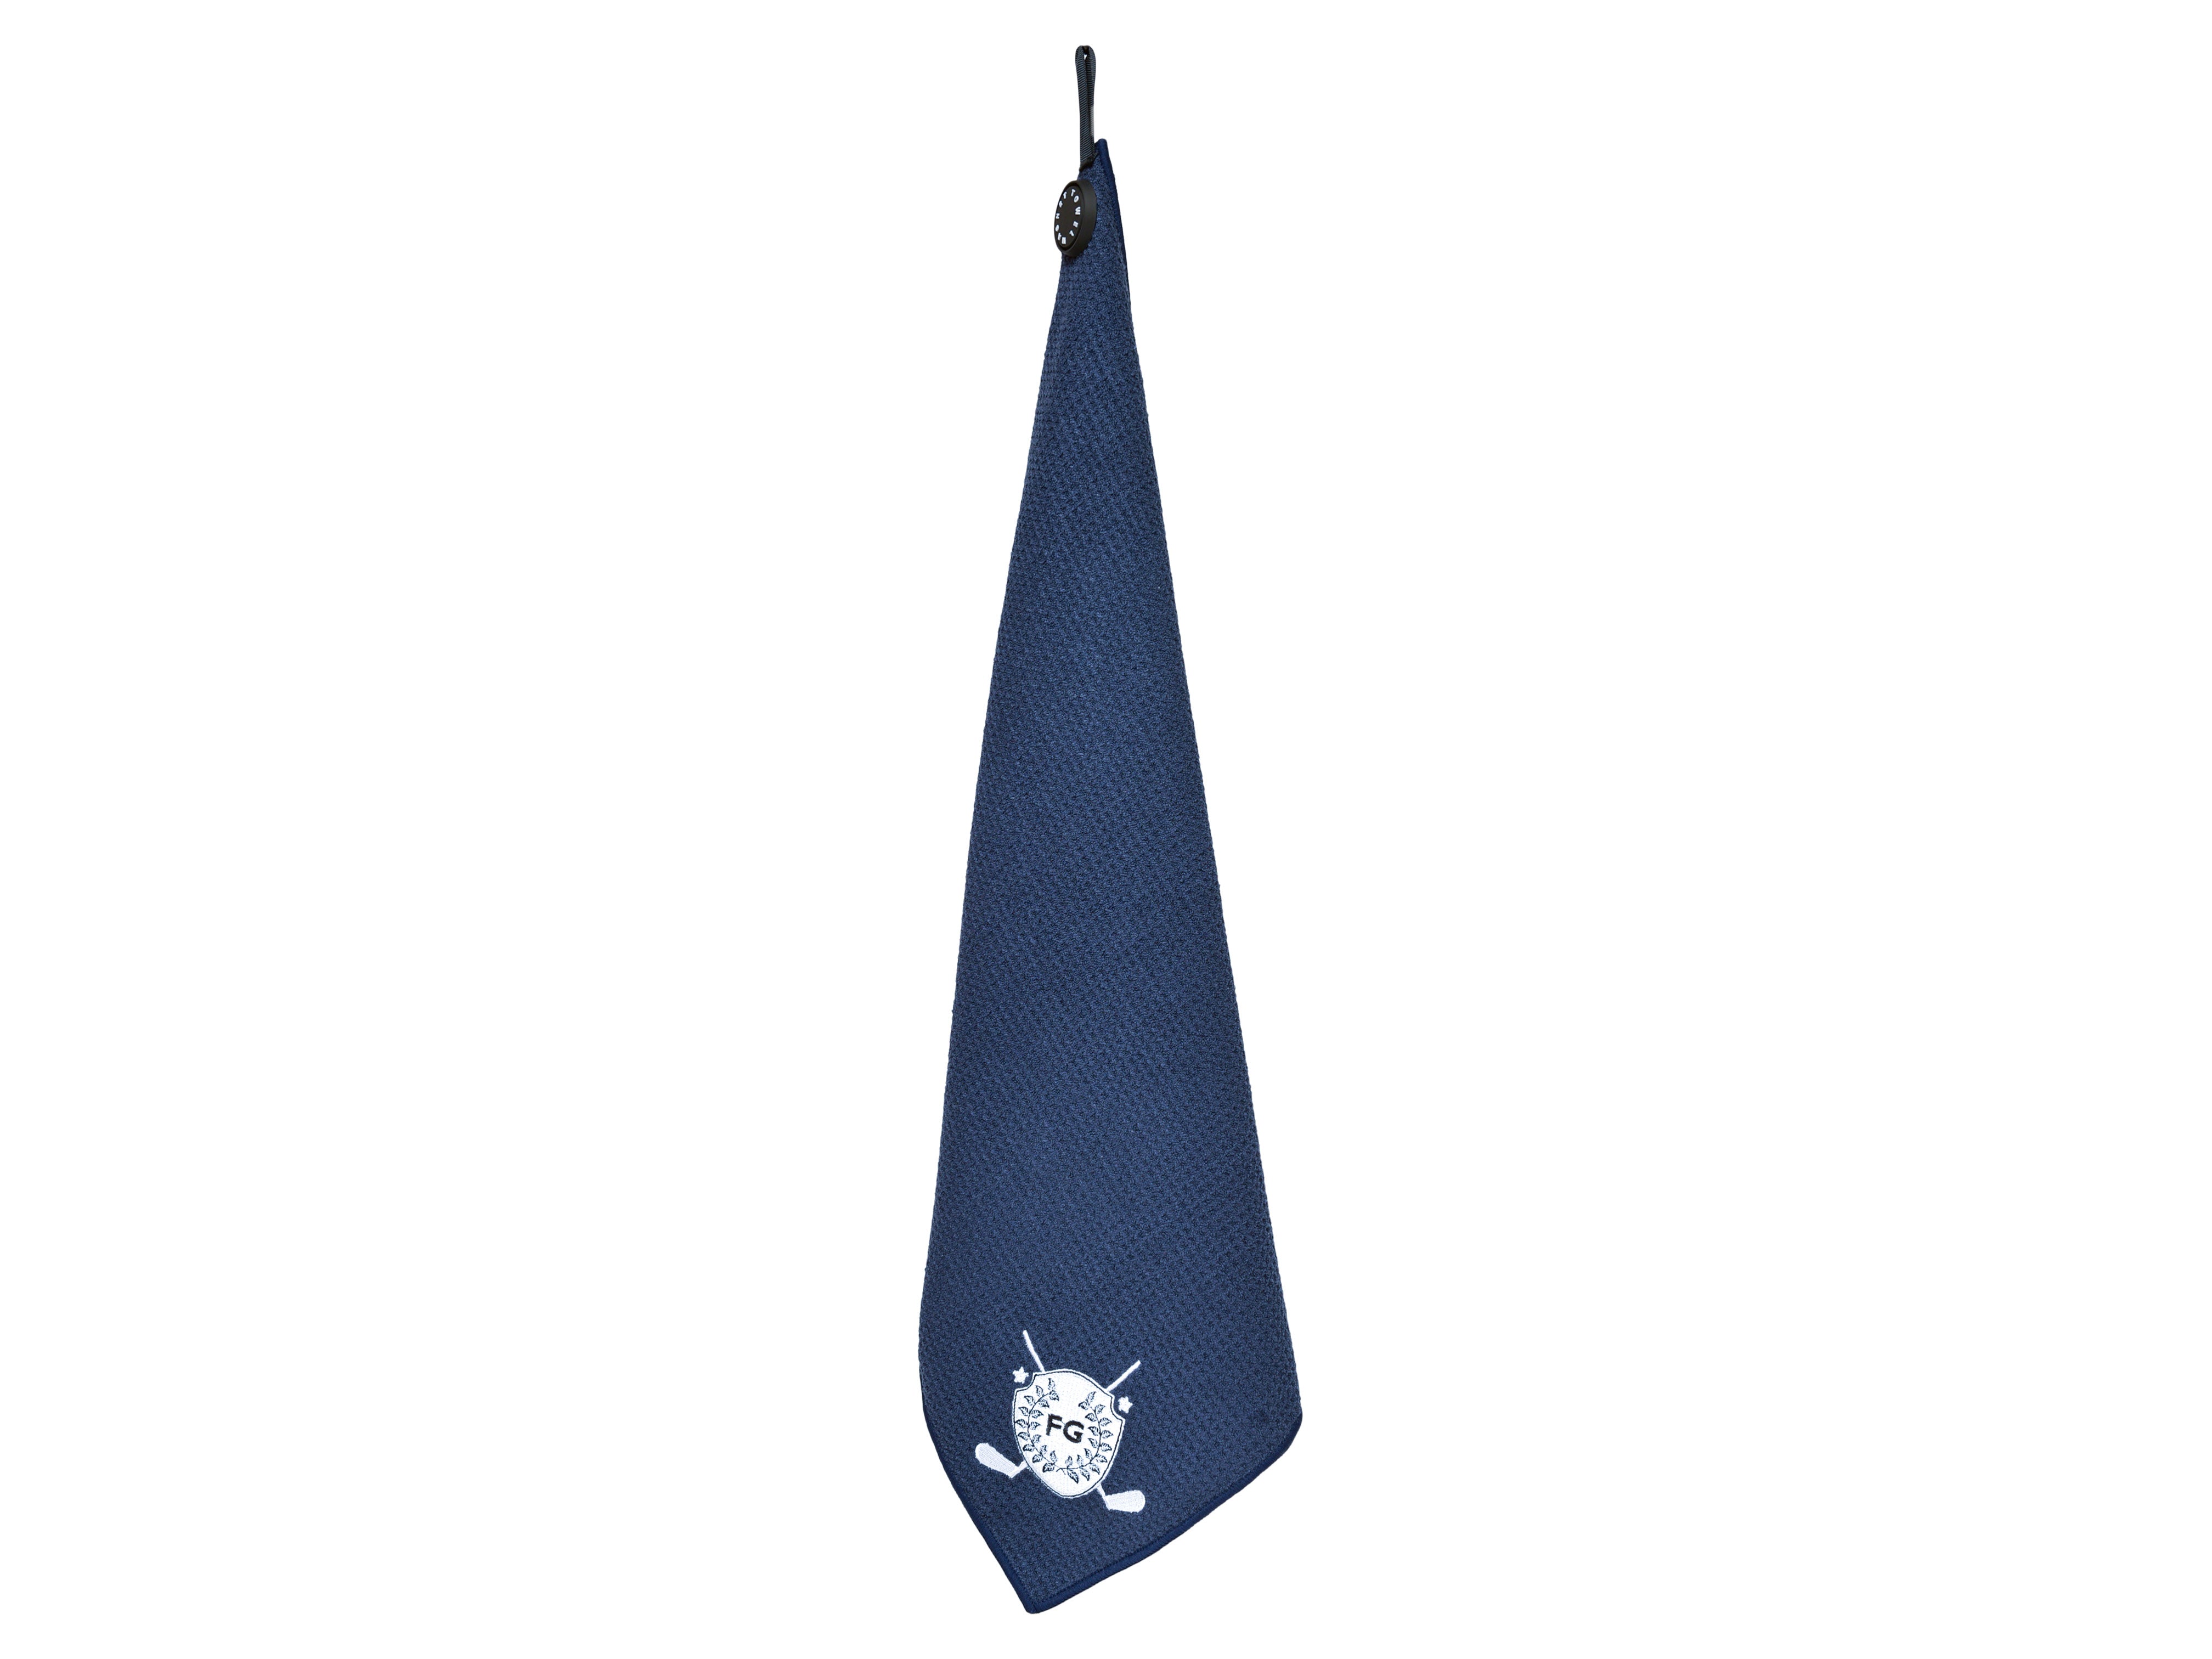 Fresco Golf Magnetic Towel Navy Single